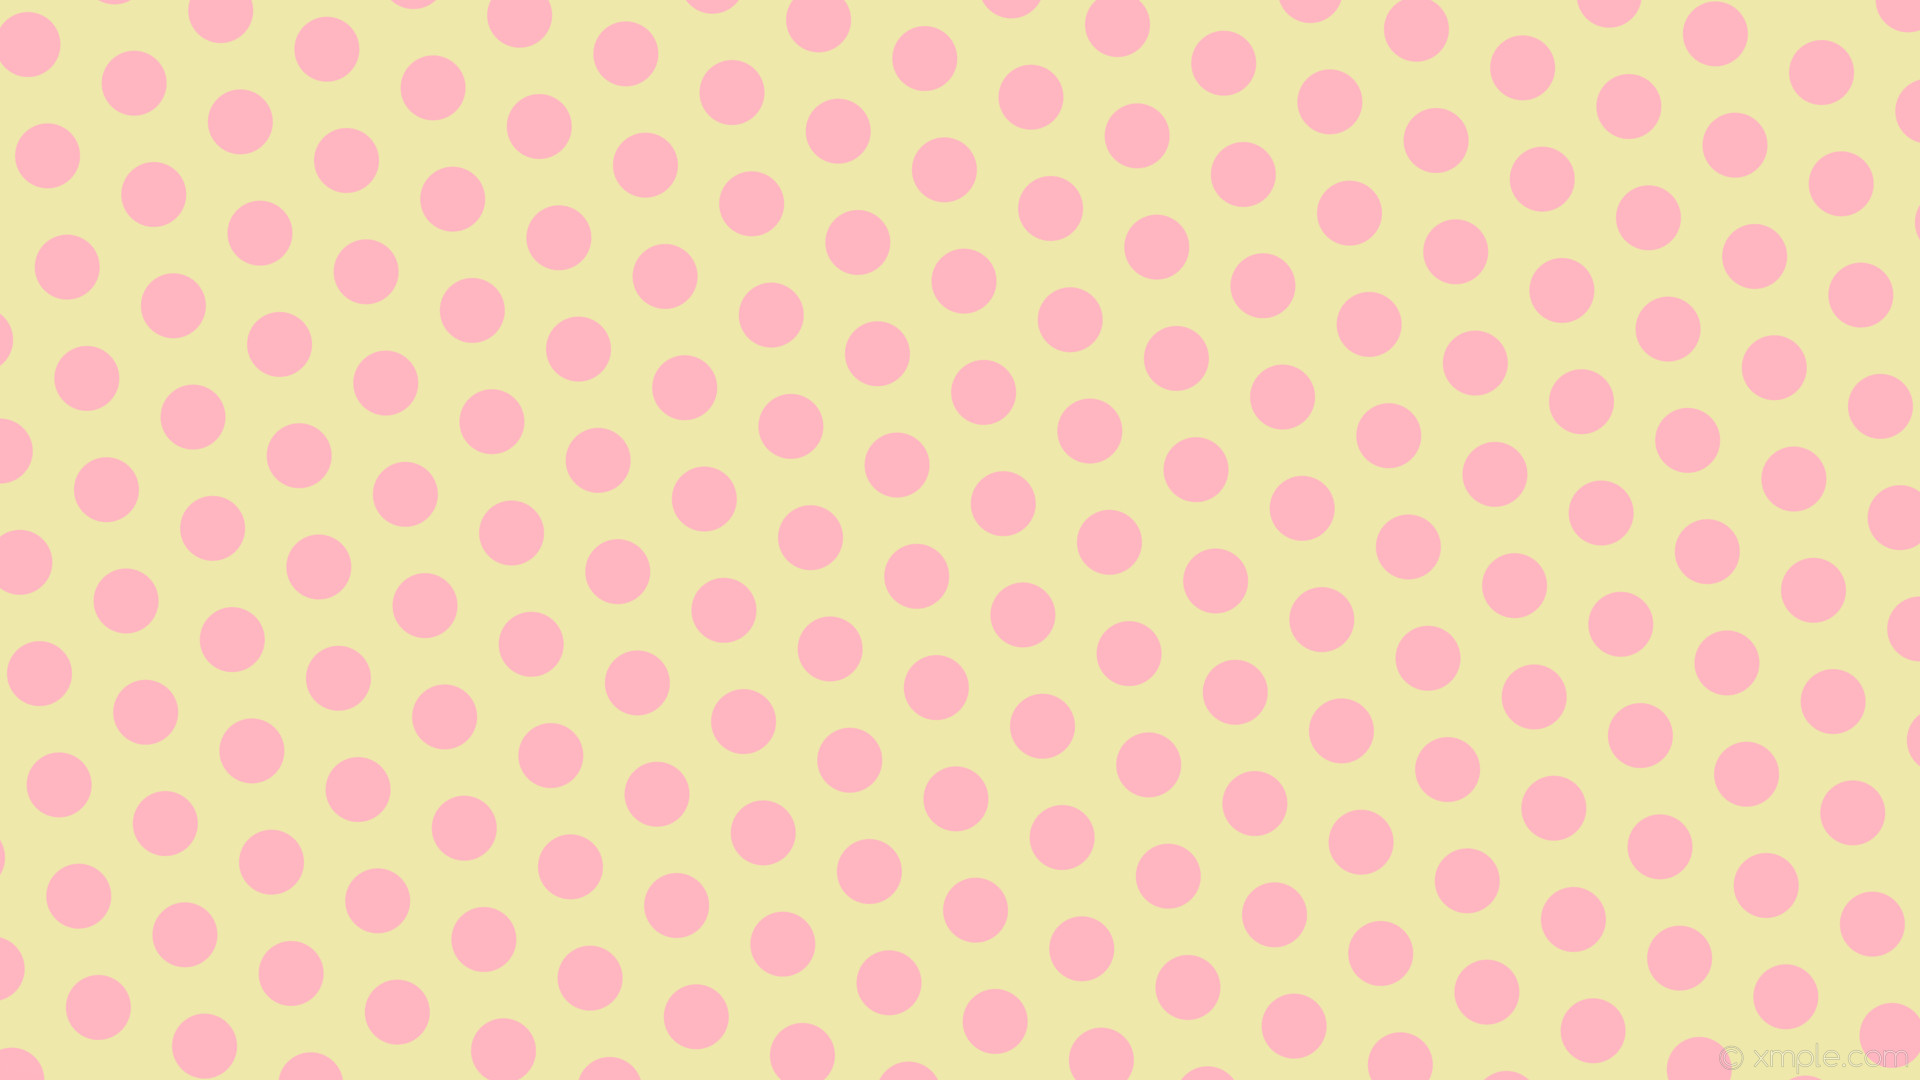 1920x1080 wallpaper hexagon pink yellow polka dots pale goldenrod light pink #eee8aa  #ffb6c1 diagonal 40